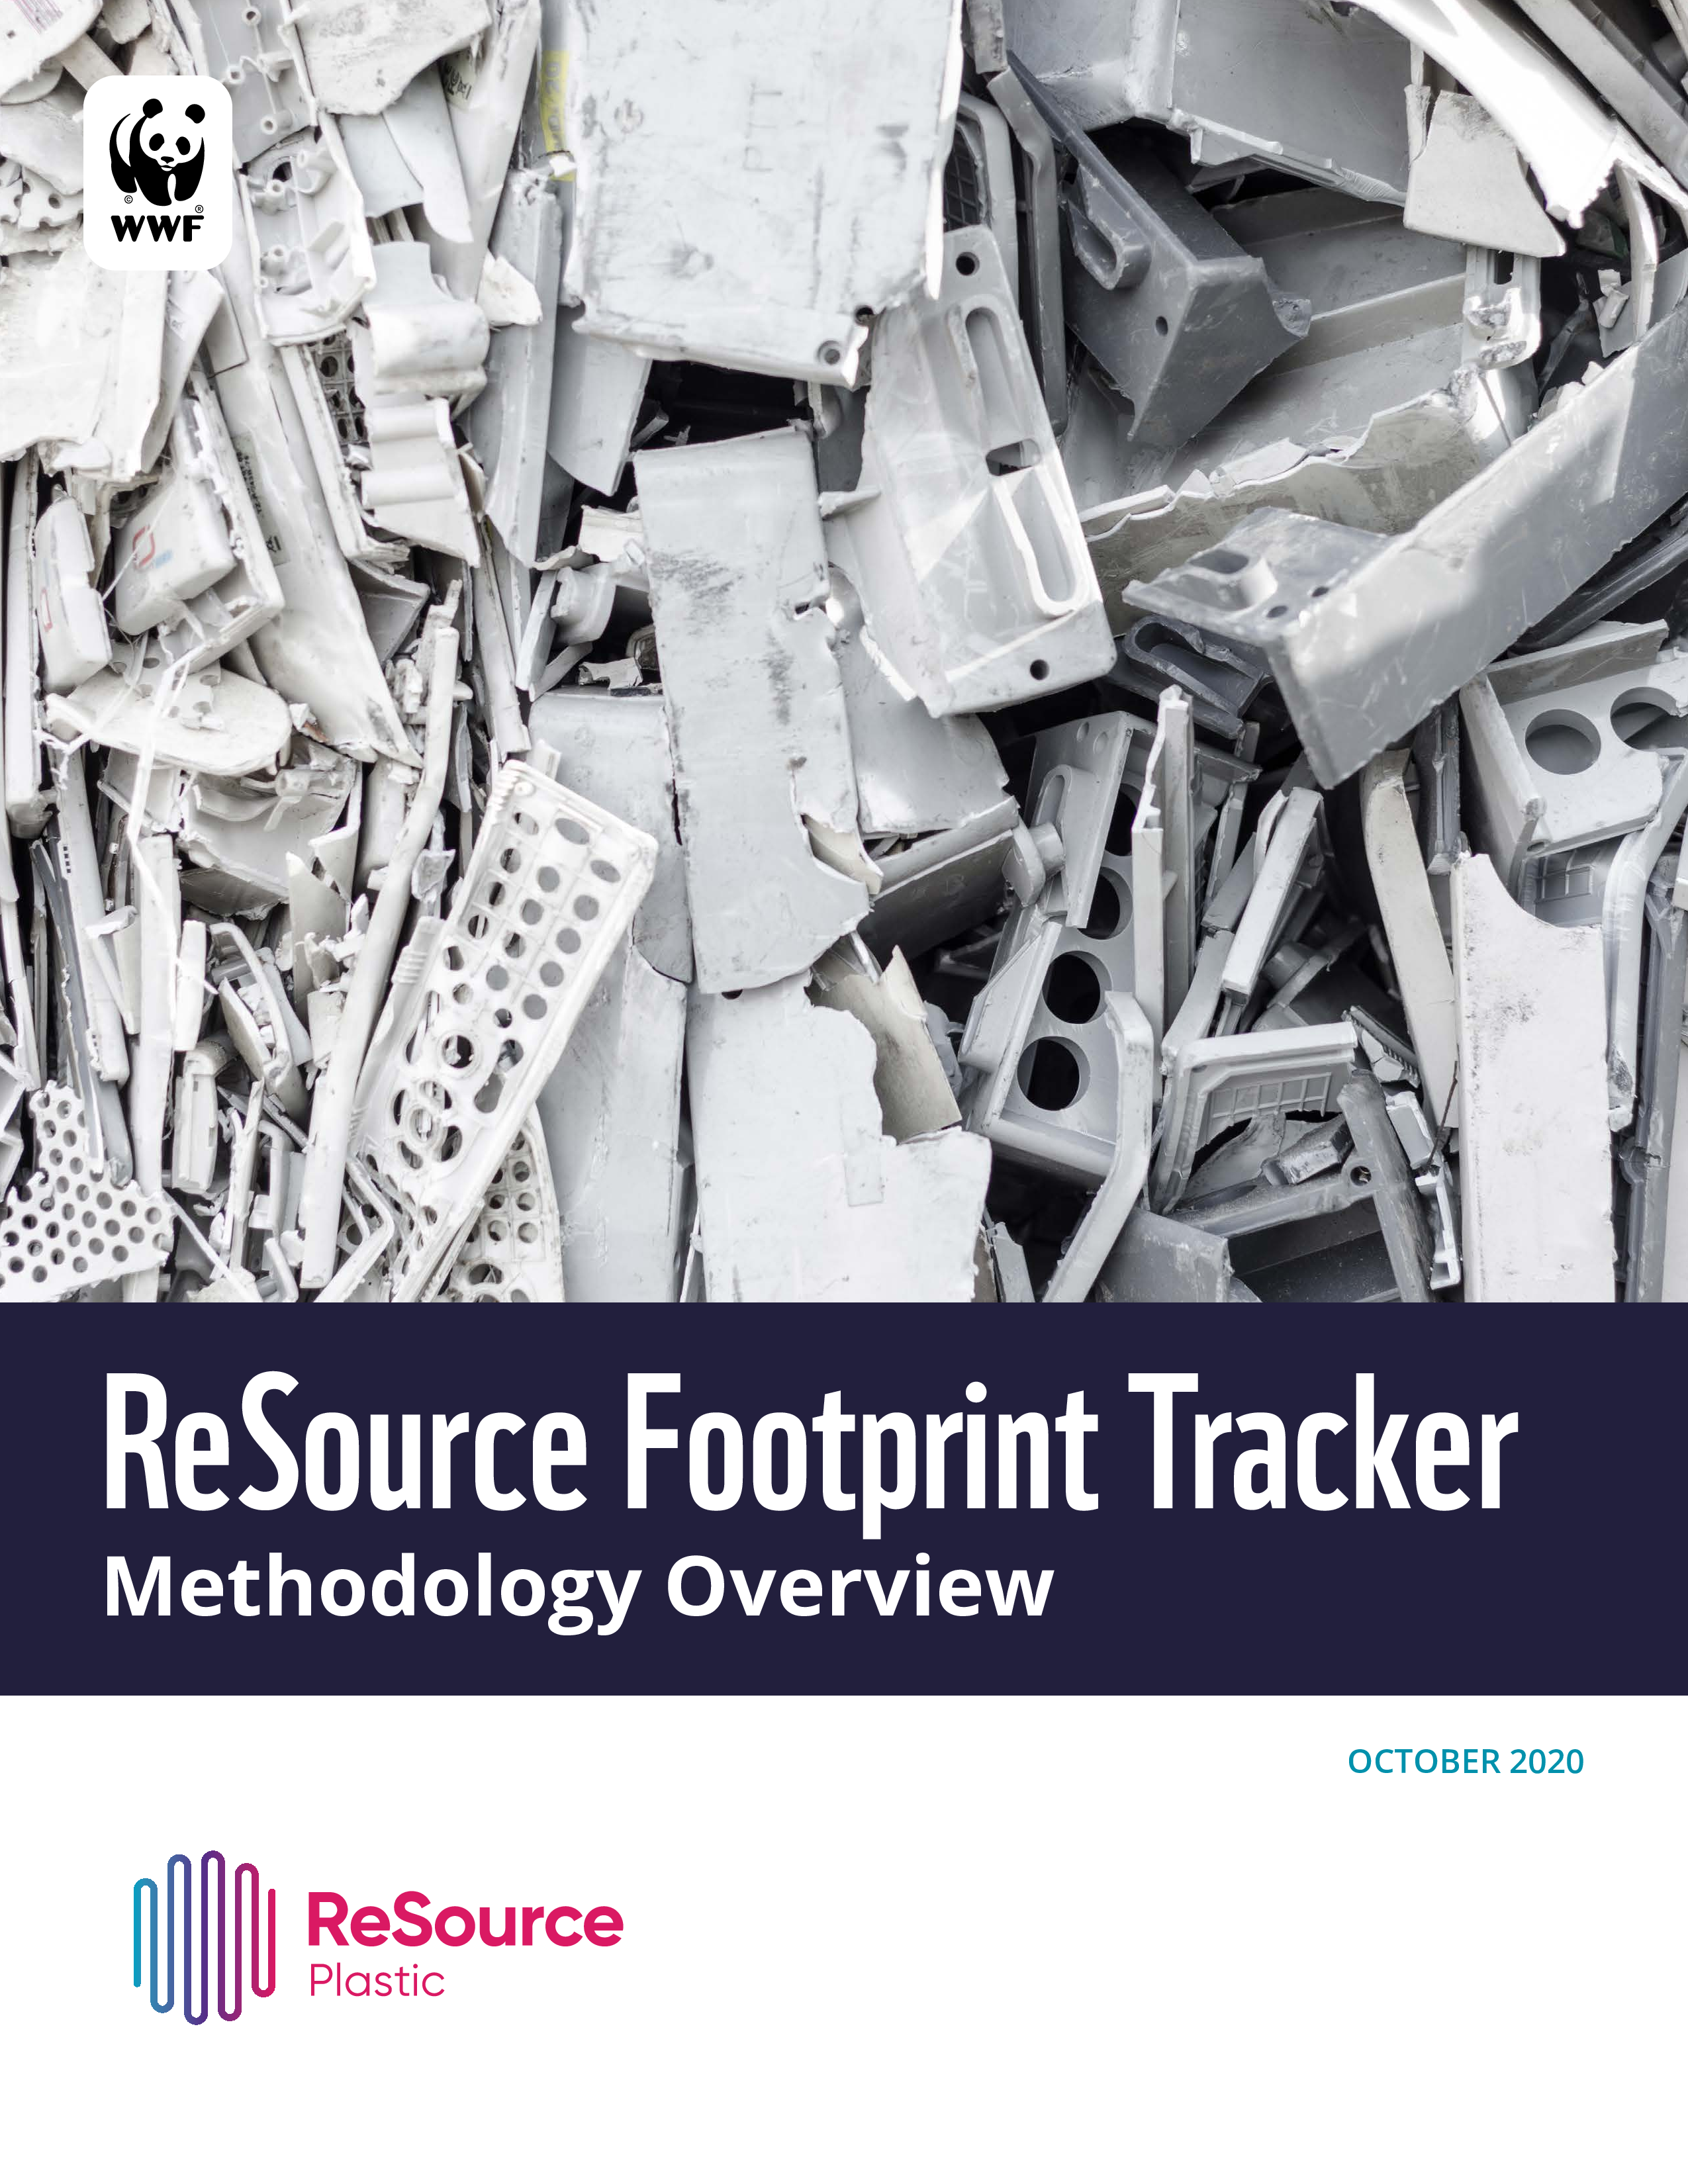 ReSource Footprint Tracker Methodology Overview, October 2020